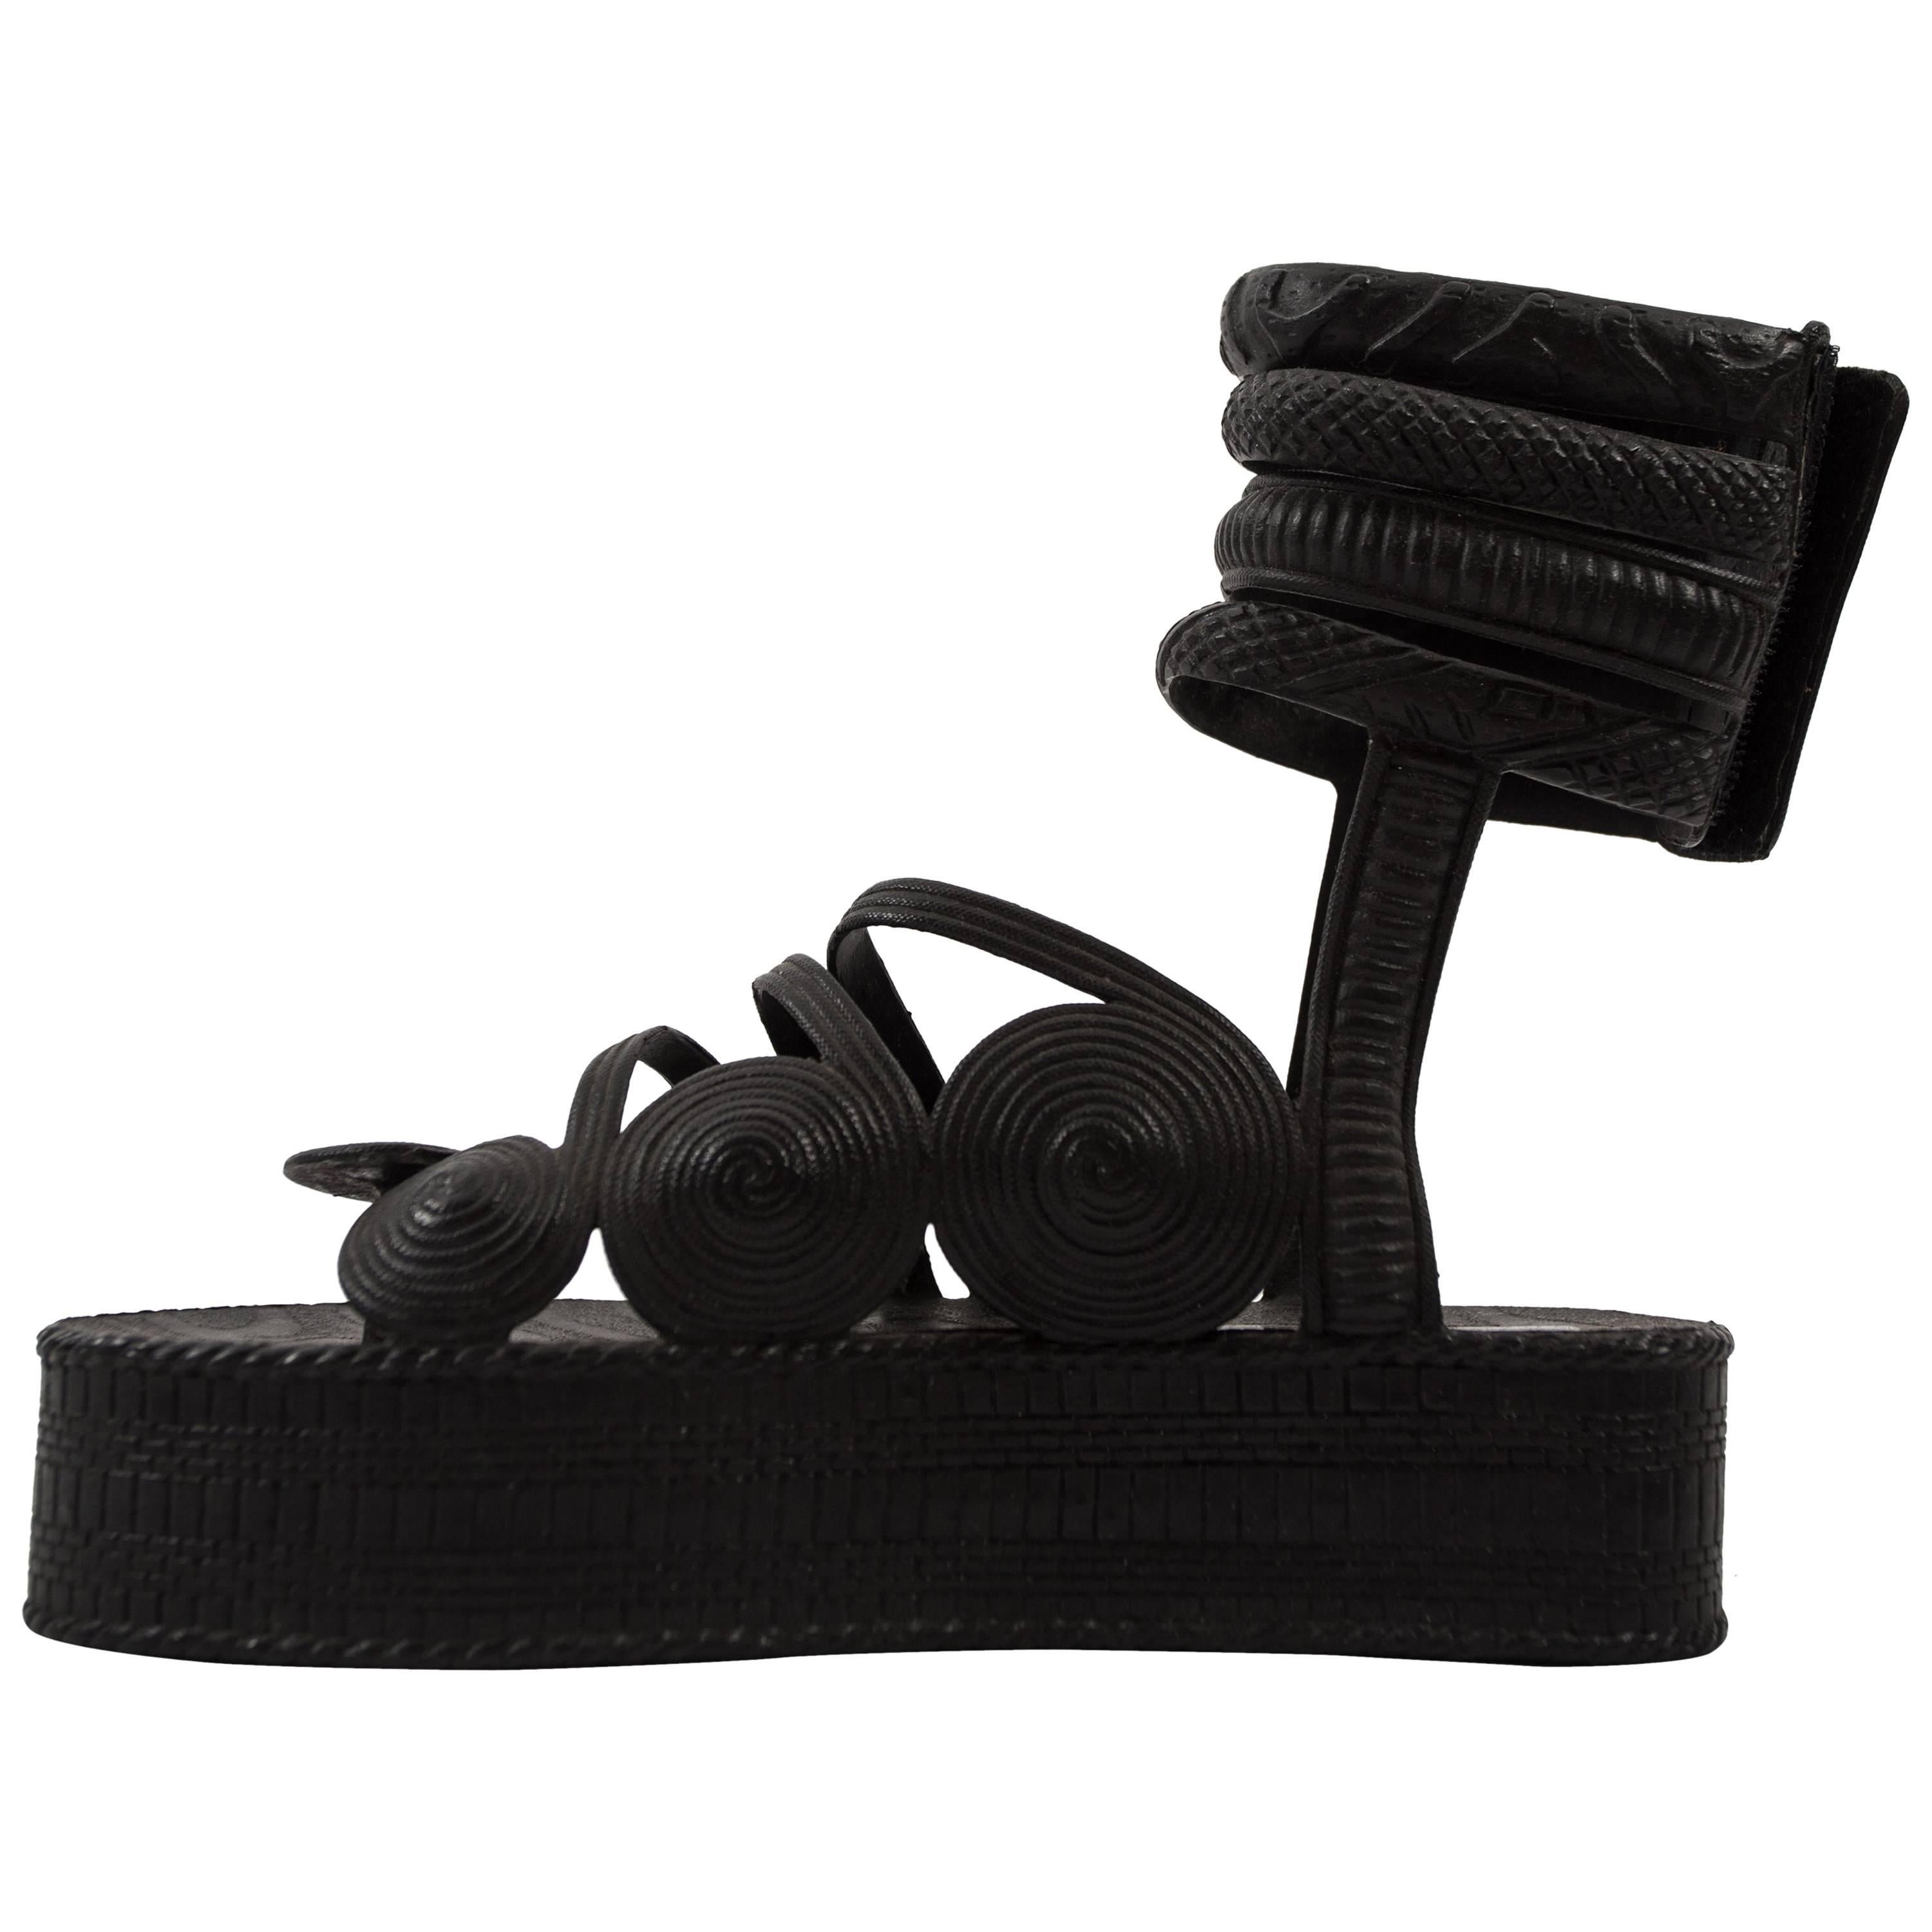 Jean Paul Gaultier Spring-Summer 1985 black rubber platform sandals